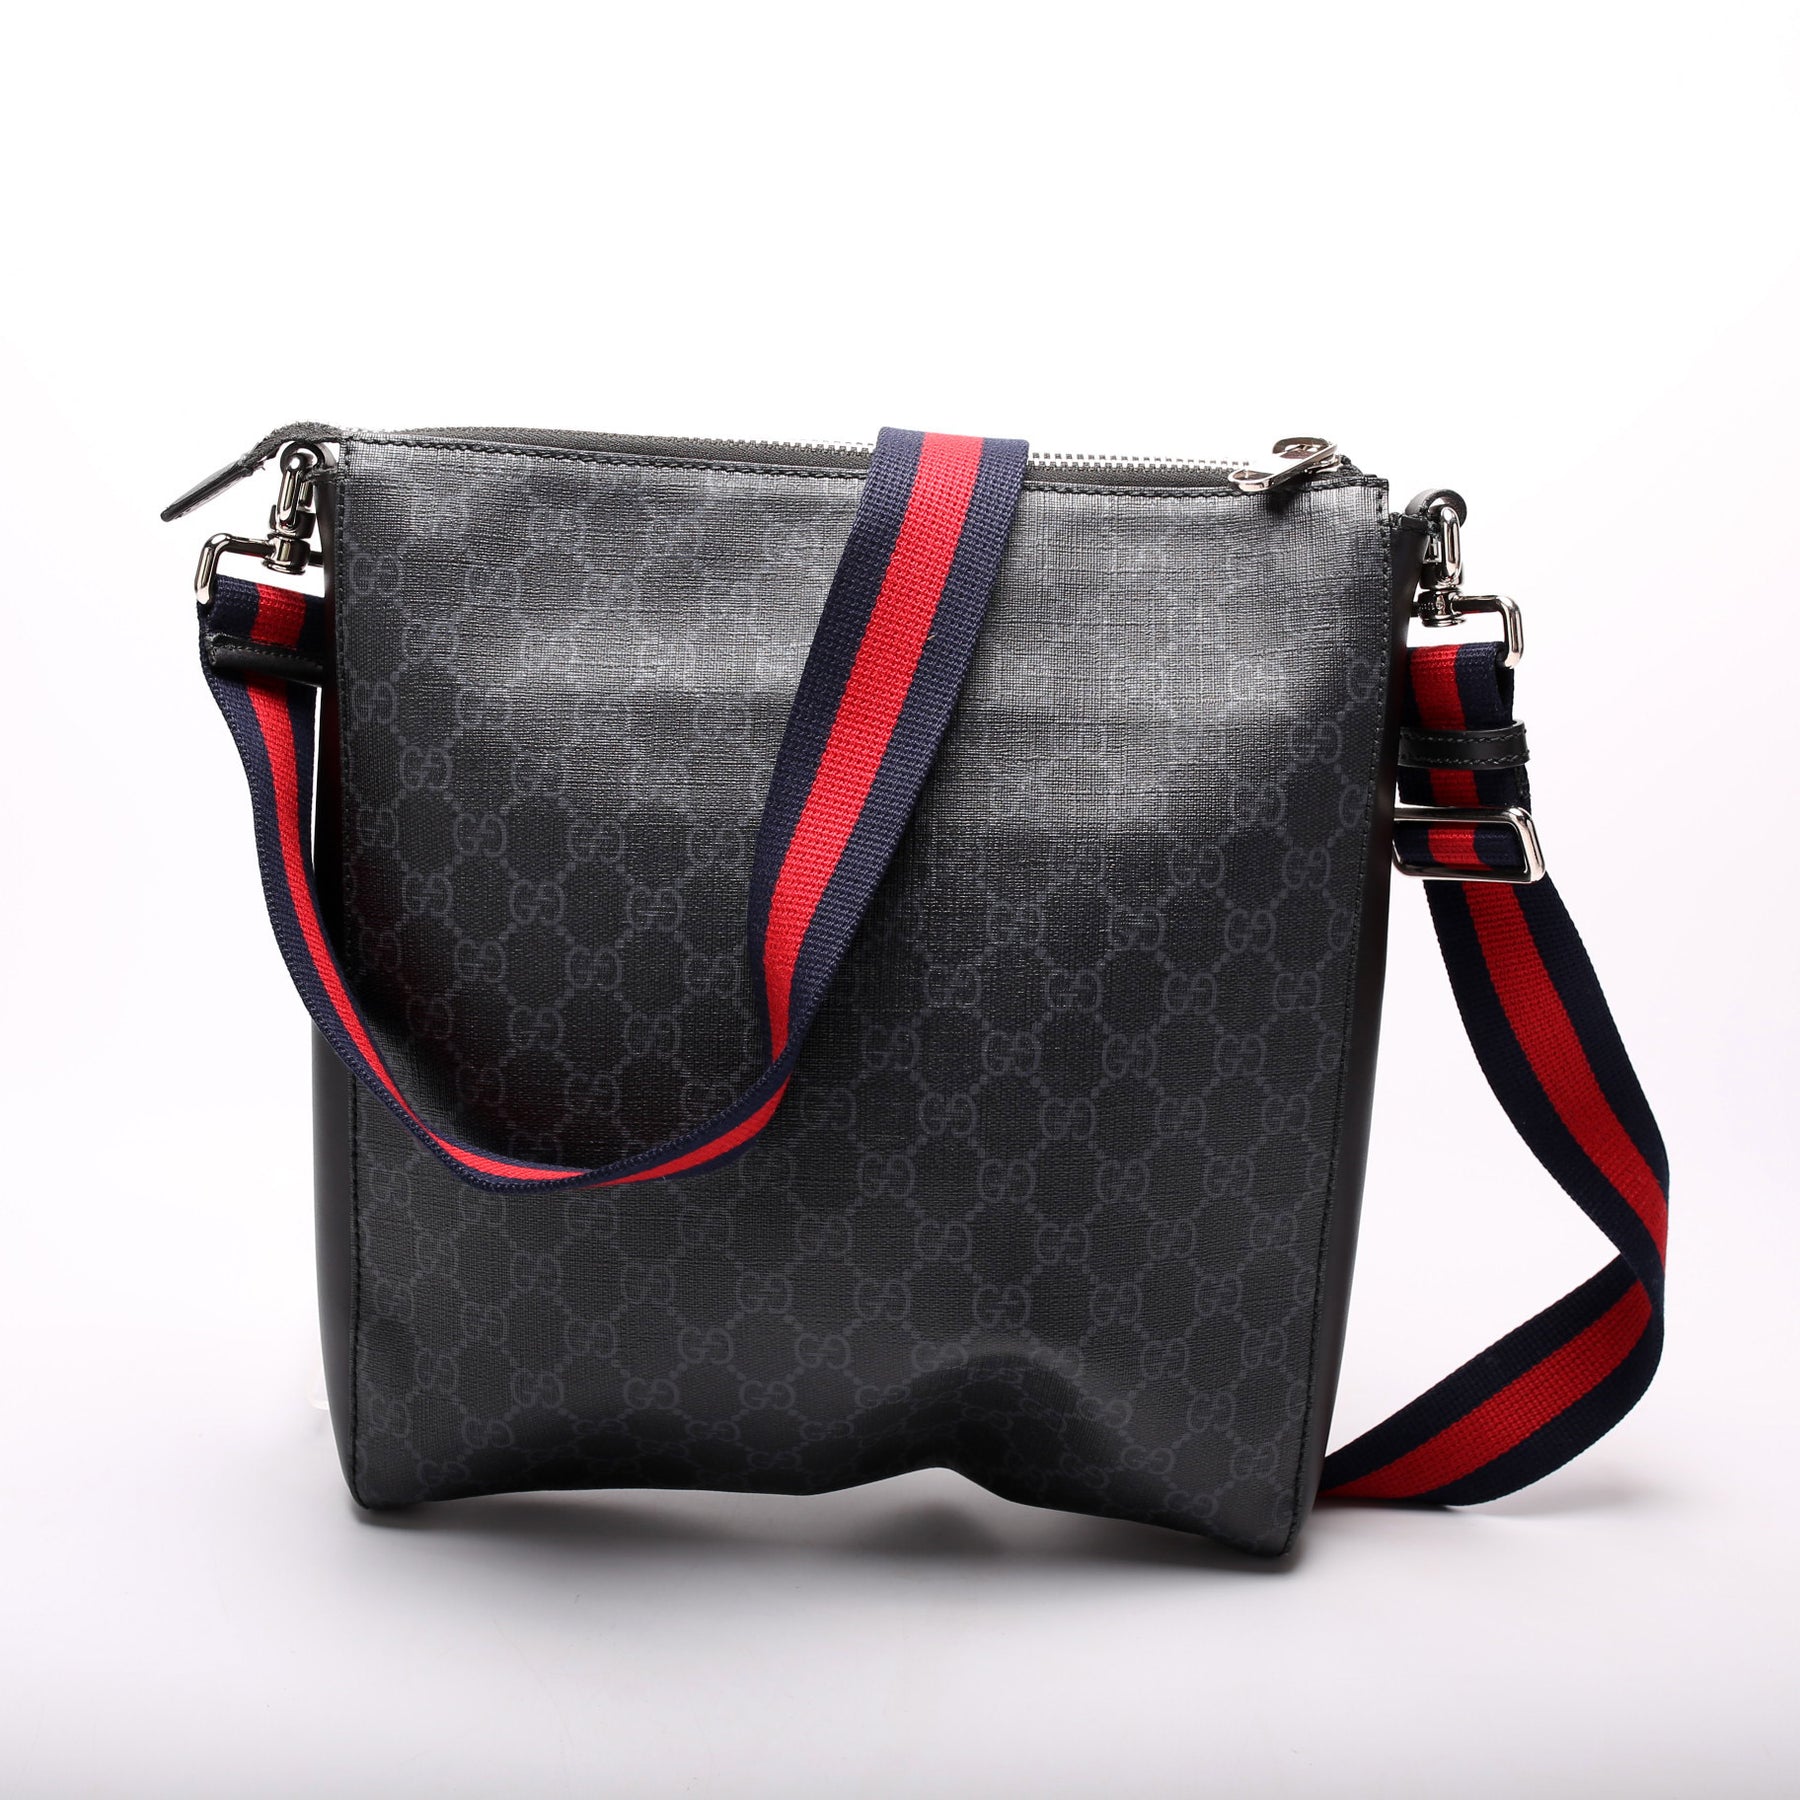 Louis Vuitton GG Supreme Night Courrier Messenger Bag in black